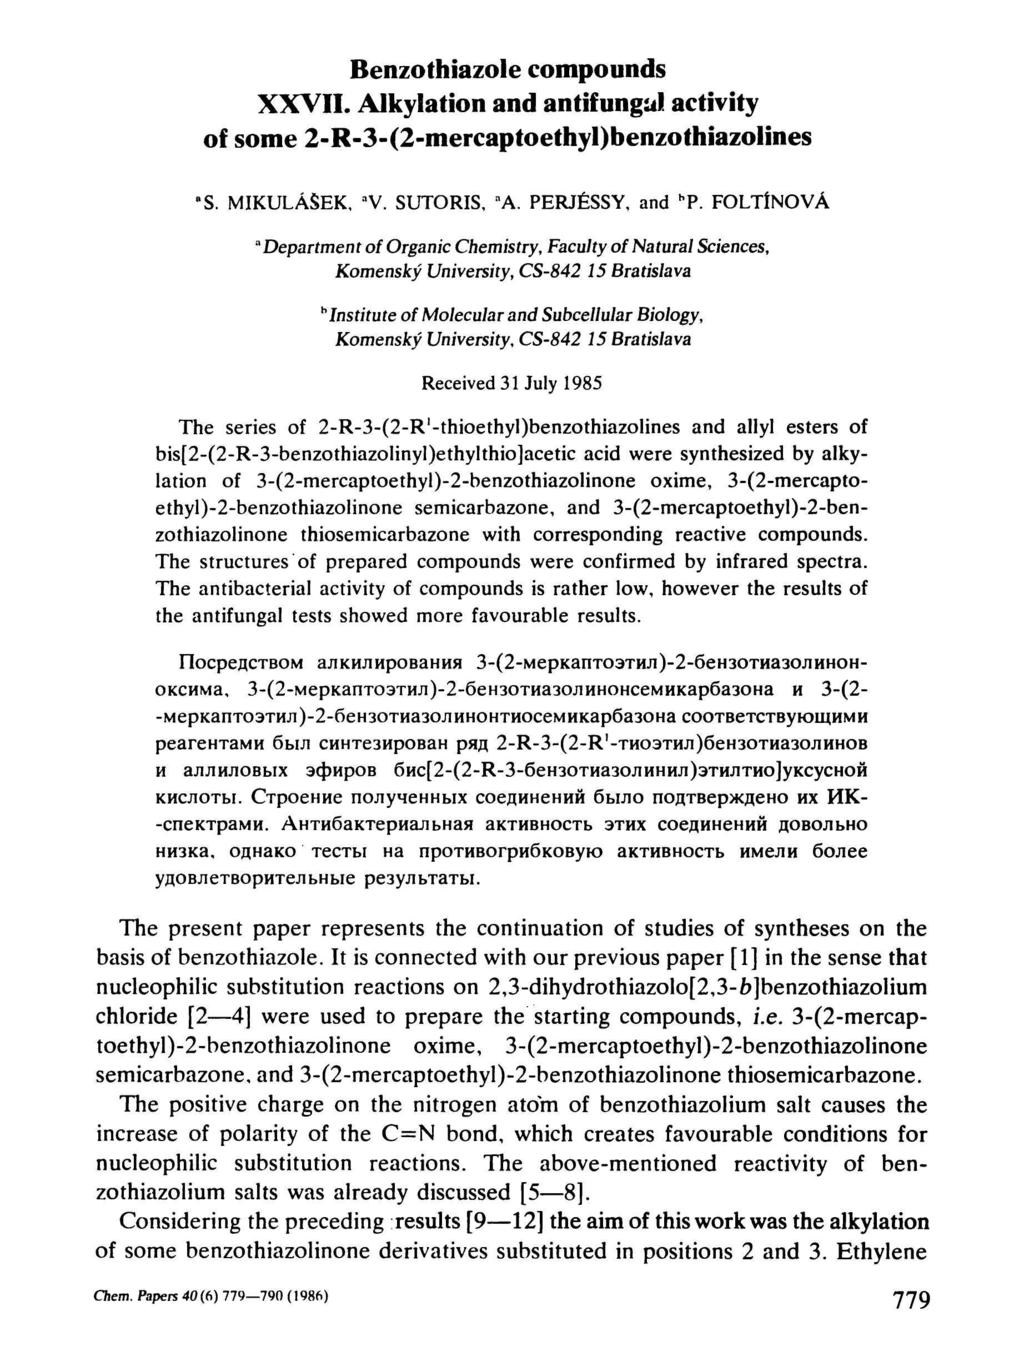 Benothiaole copounds XXVII. Alkylation and antifungal activity of soe 2-R-3-(2-ercaptoethyl)benothiaolines a S. MIKULÁŠEK, a V. SUTORIS, a A. PERJÉSSY, and b P.